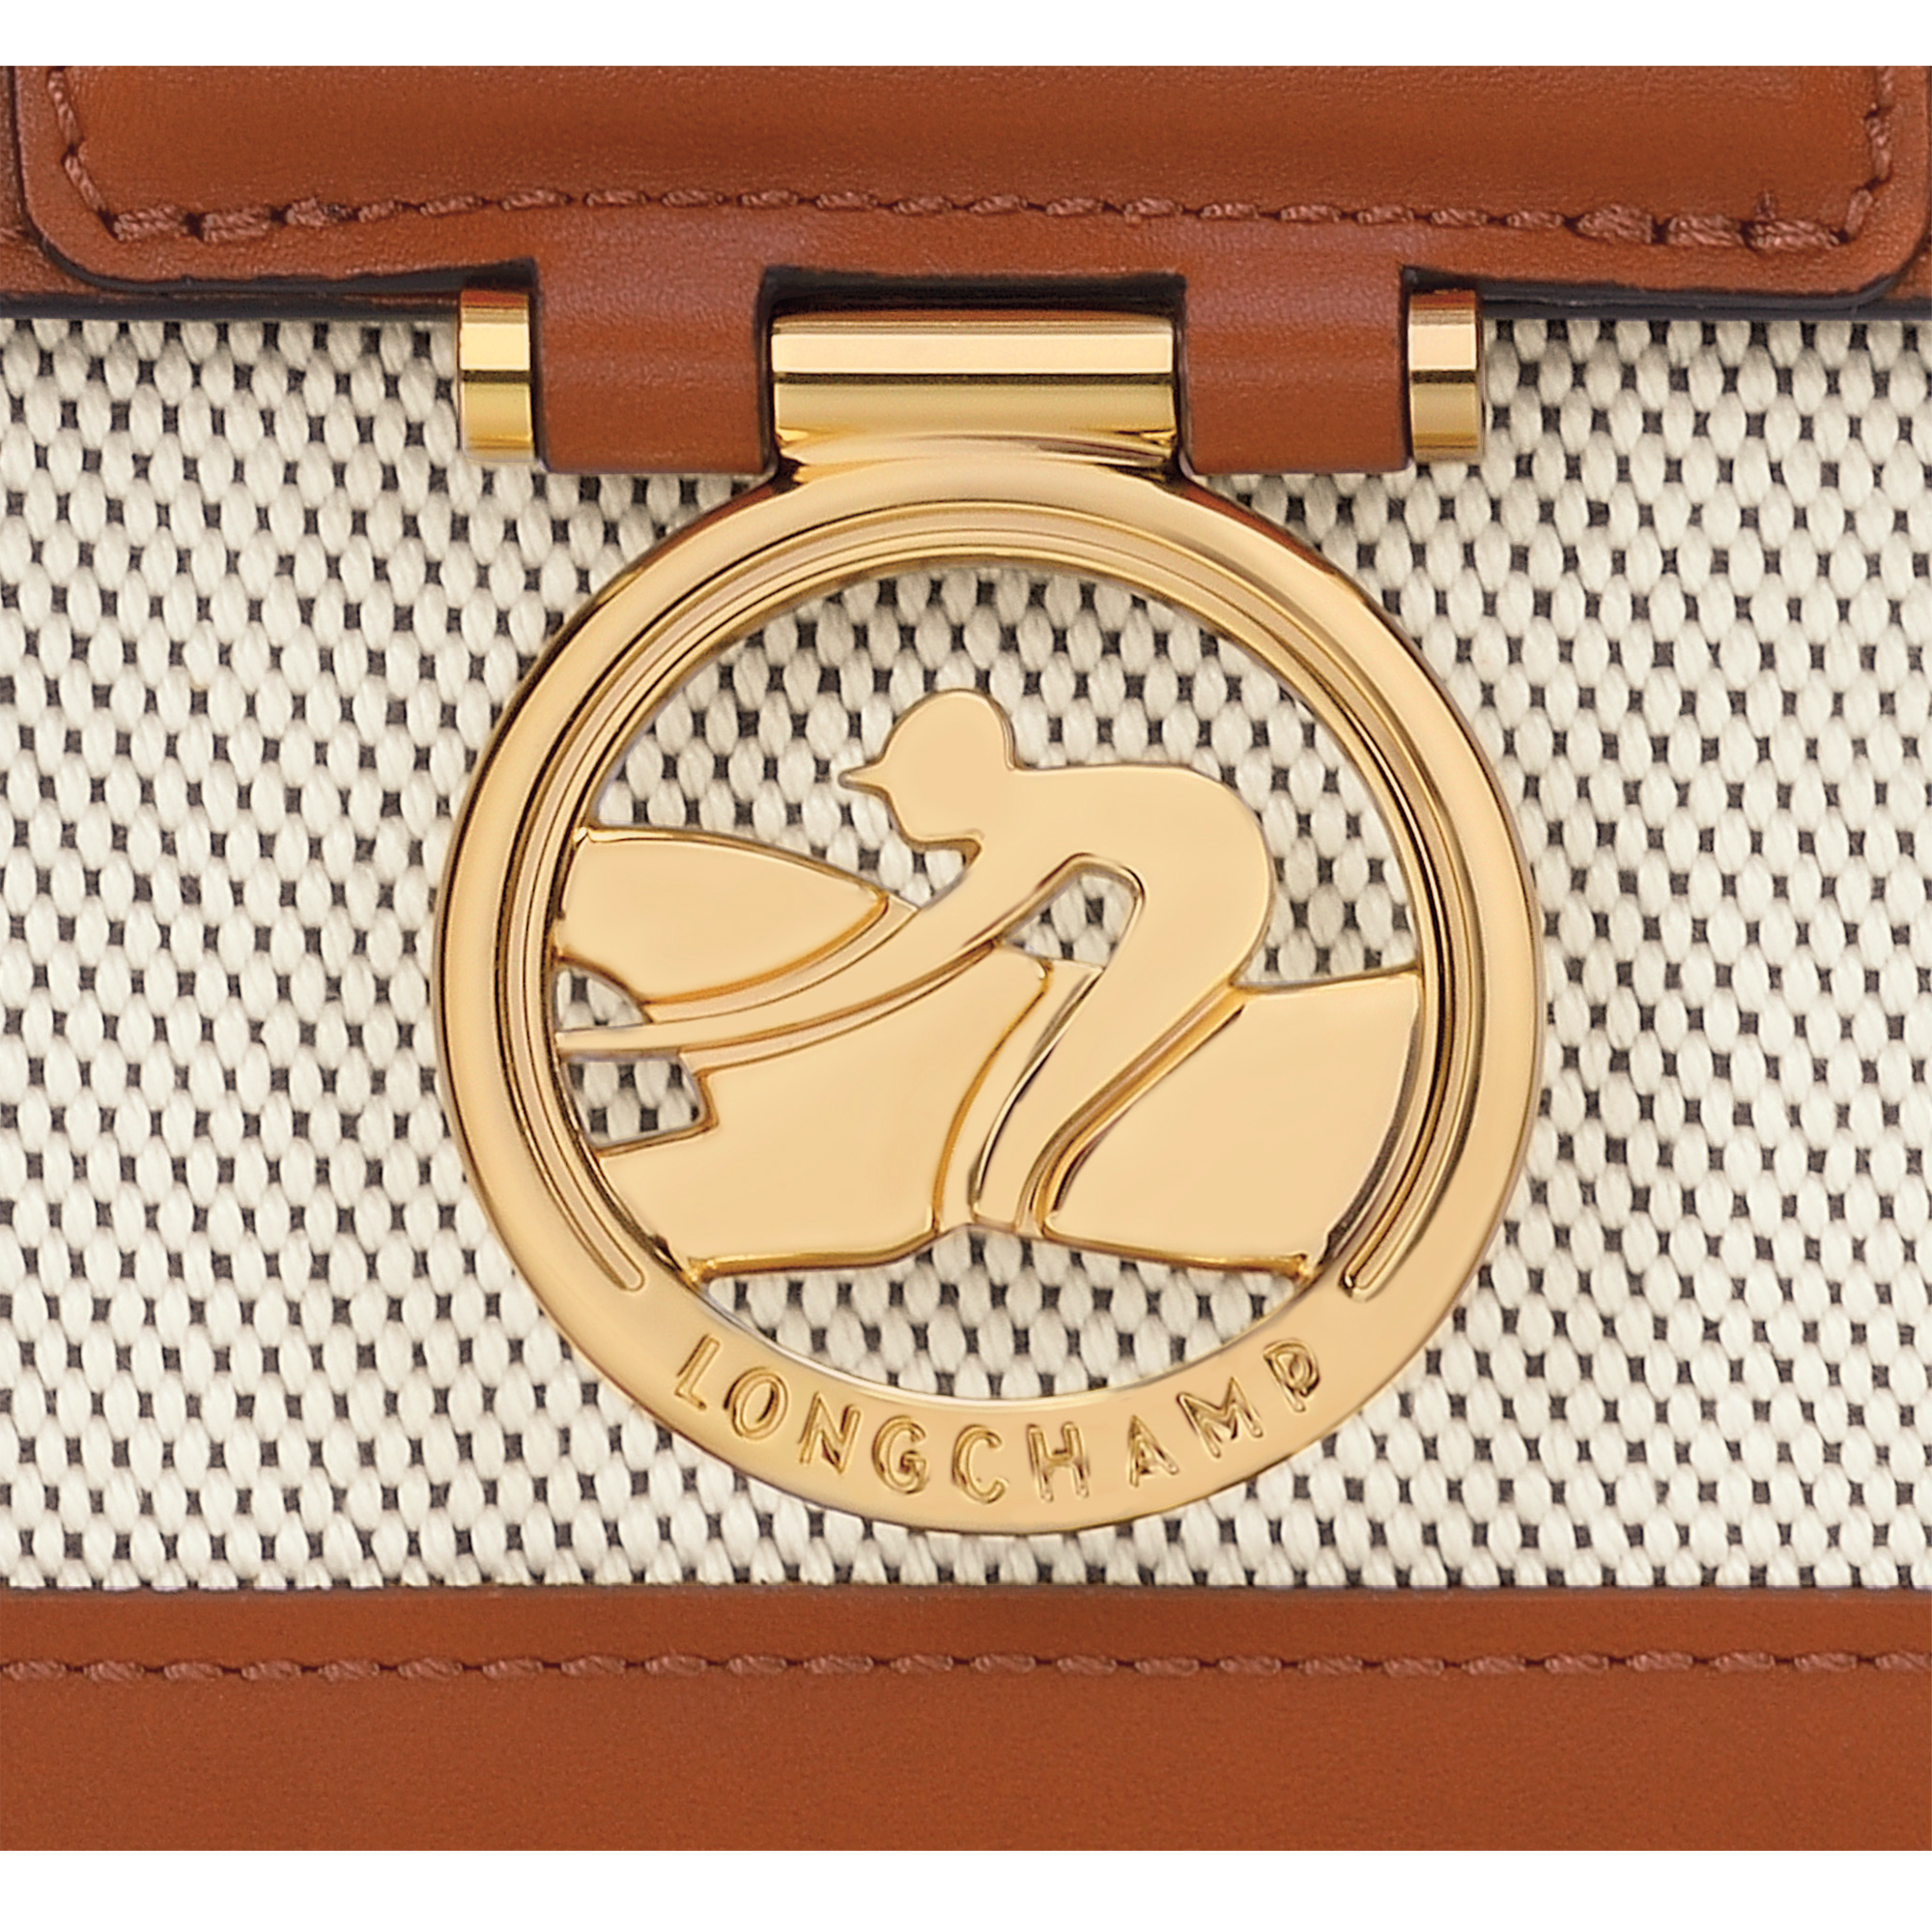 Longchamp BOX-TROT - Crossbody bag M in Cognac - 4 (SKU: 10175HBX504)